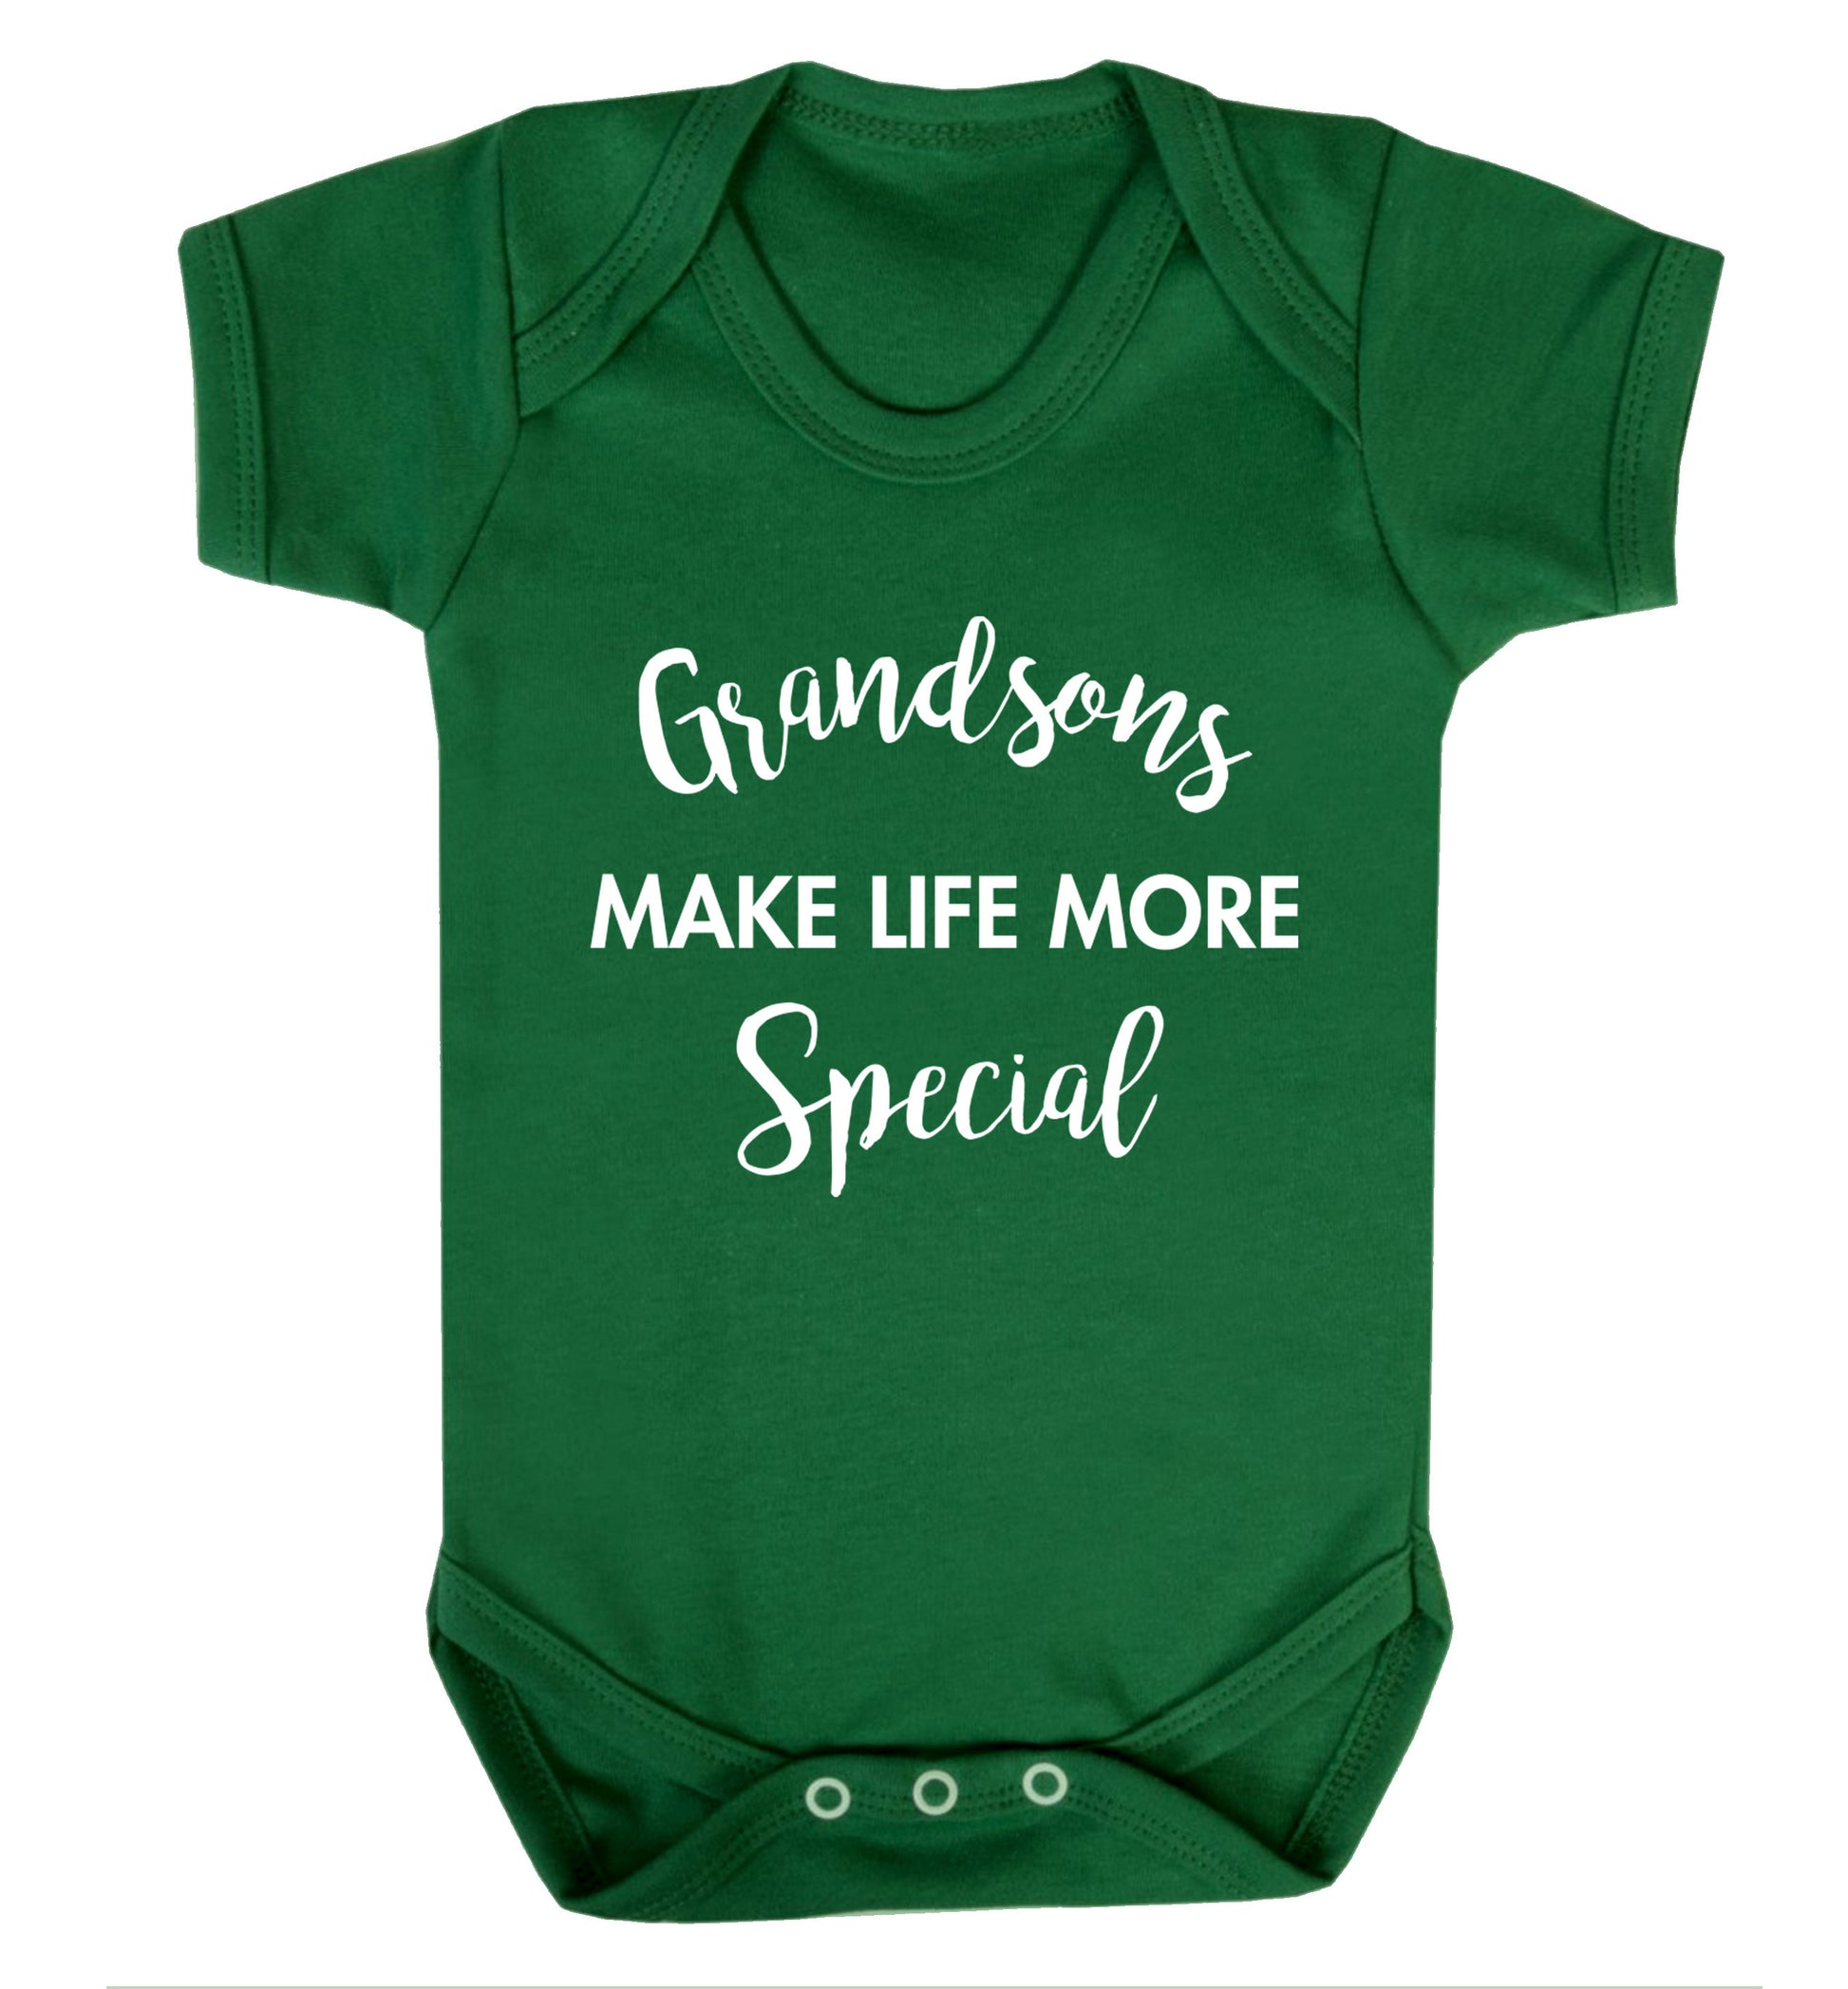 Grandsons make life more special Baby Vest green 18-24 months